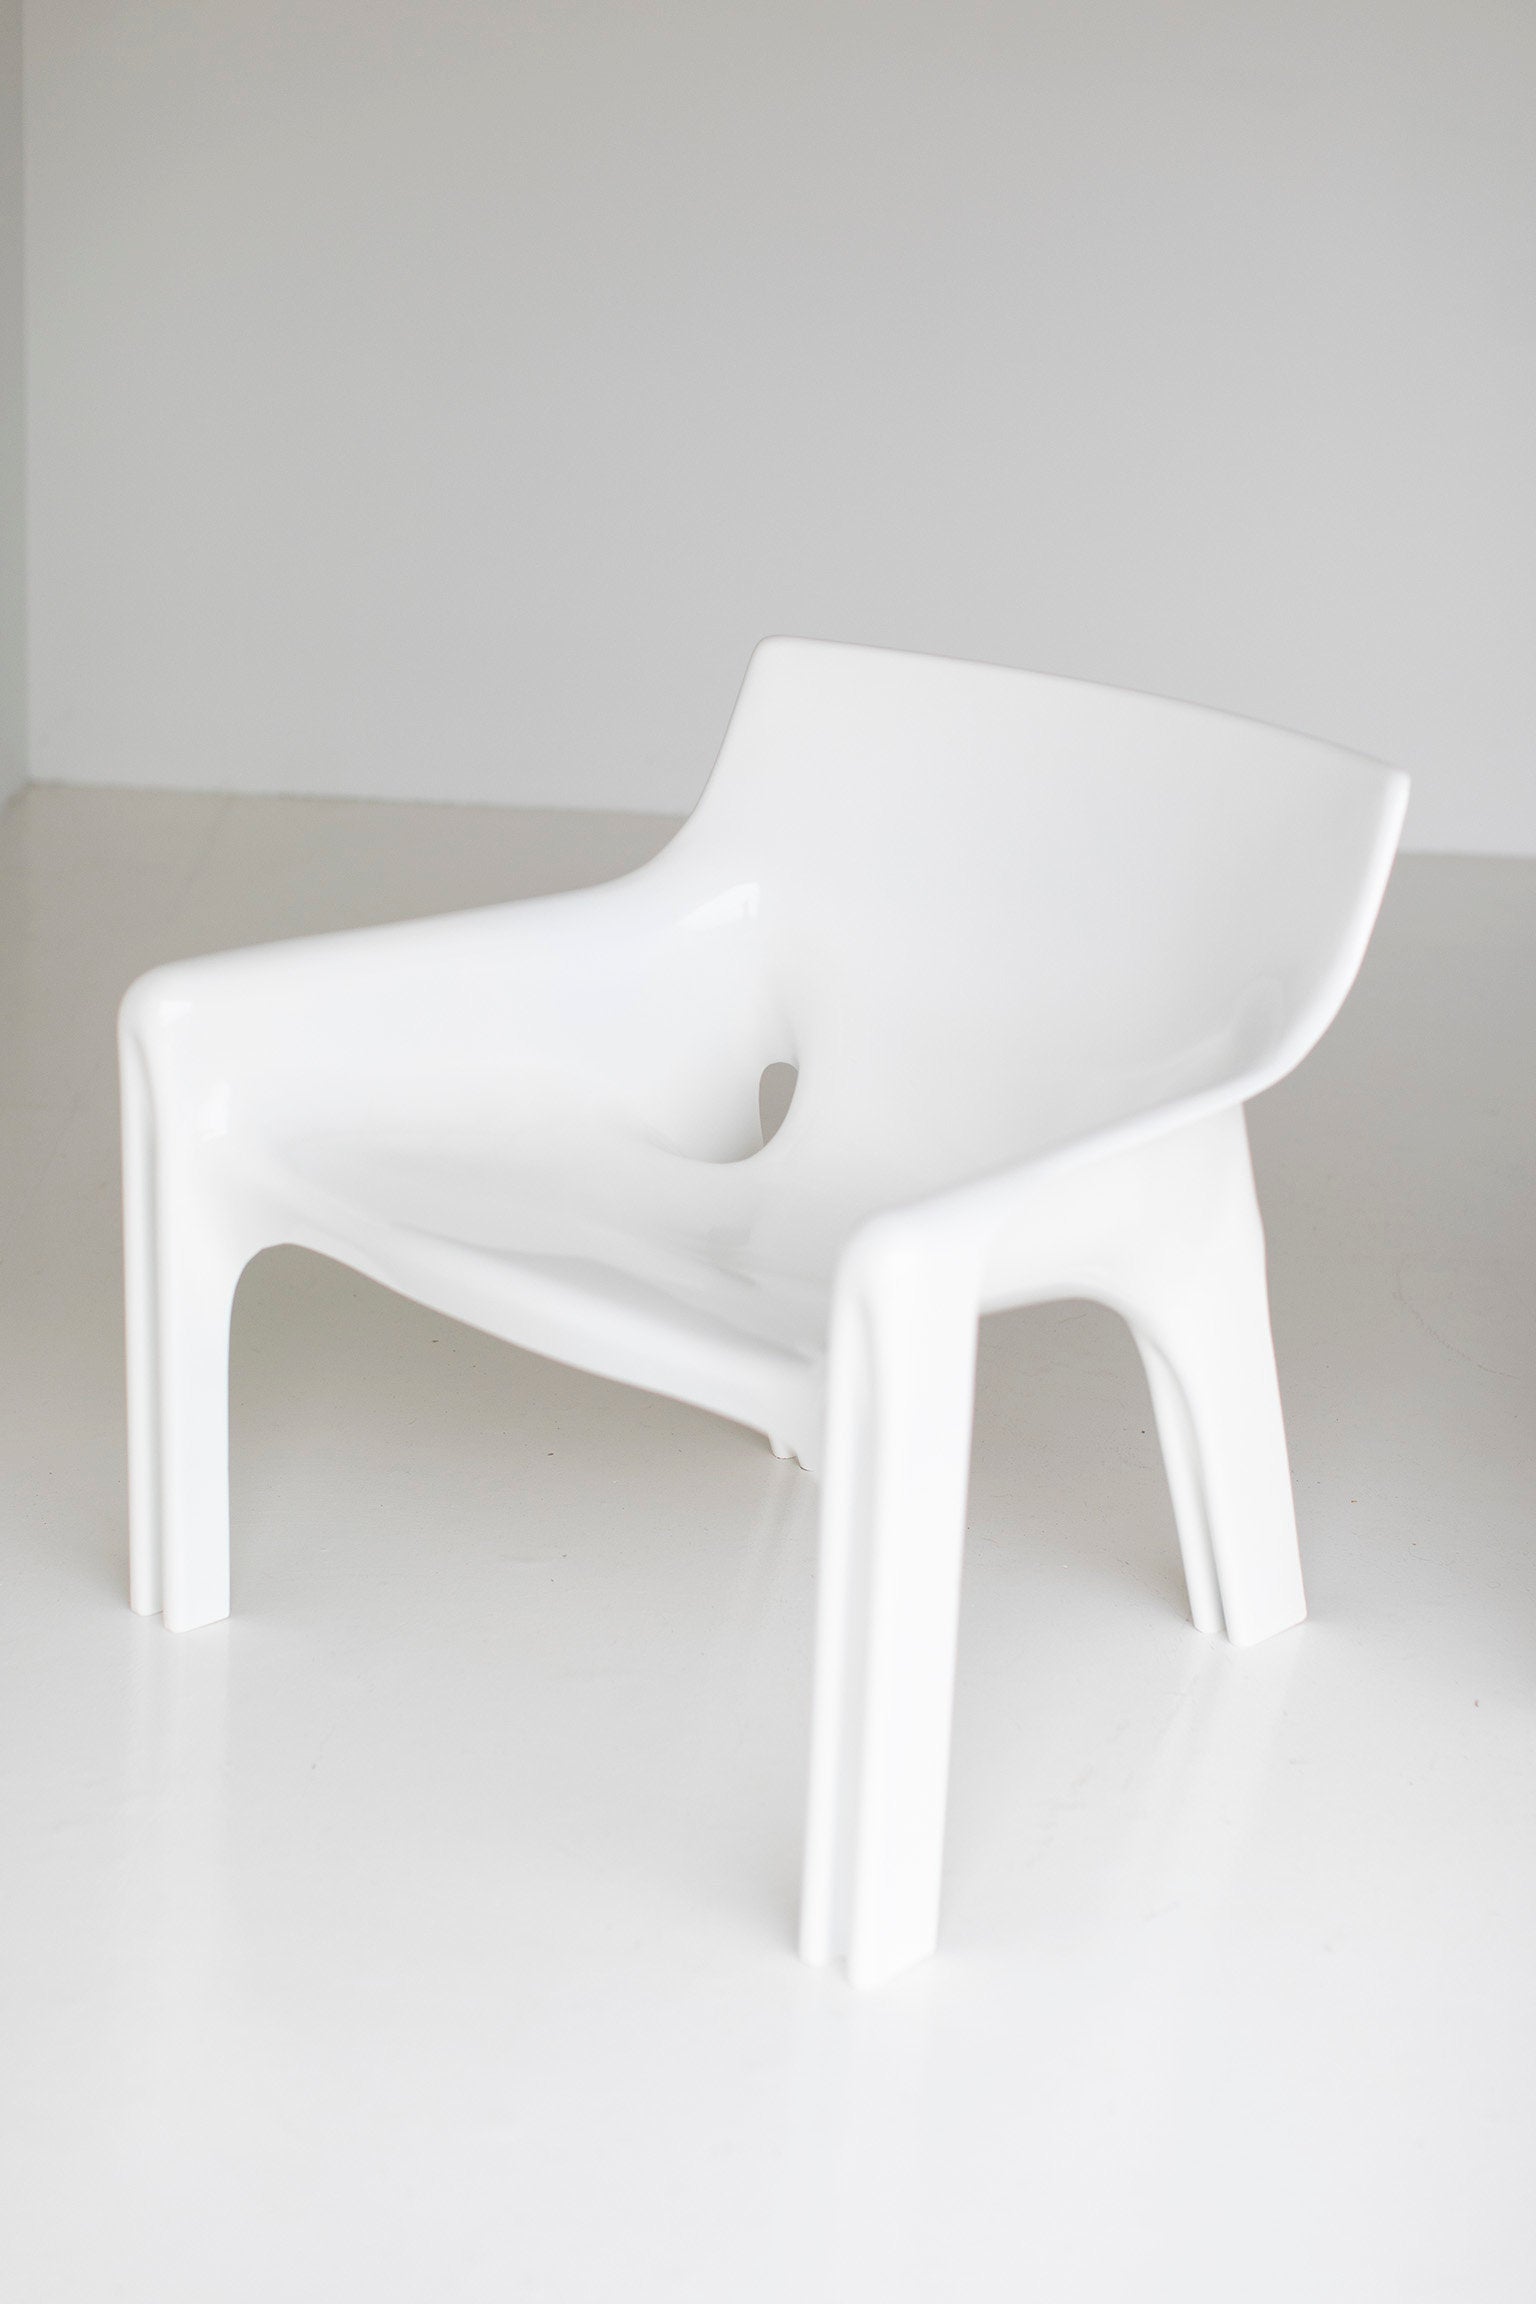 Vico Magistretti Lounge Chairs for Artemide - 06041801